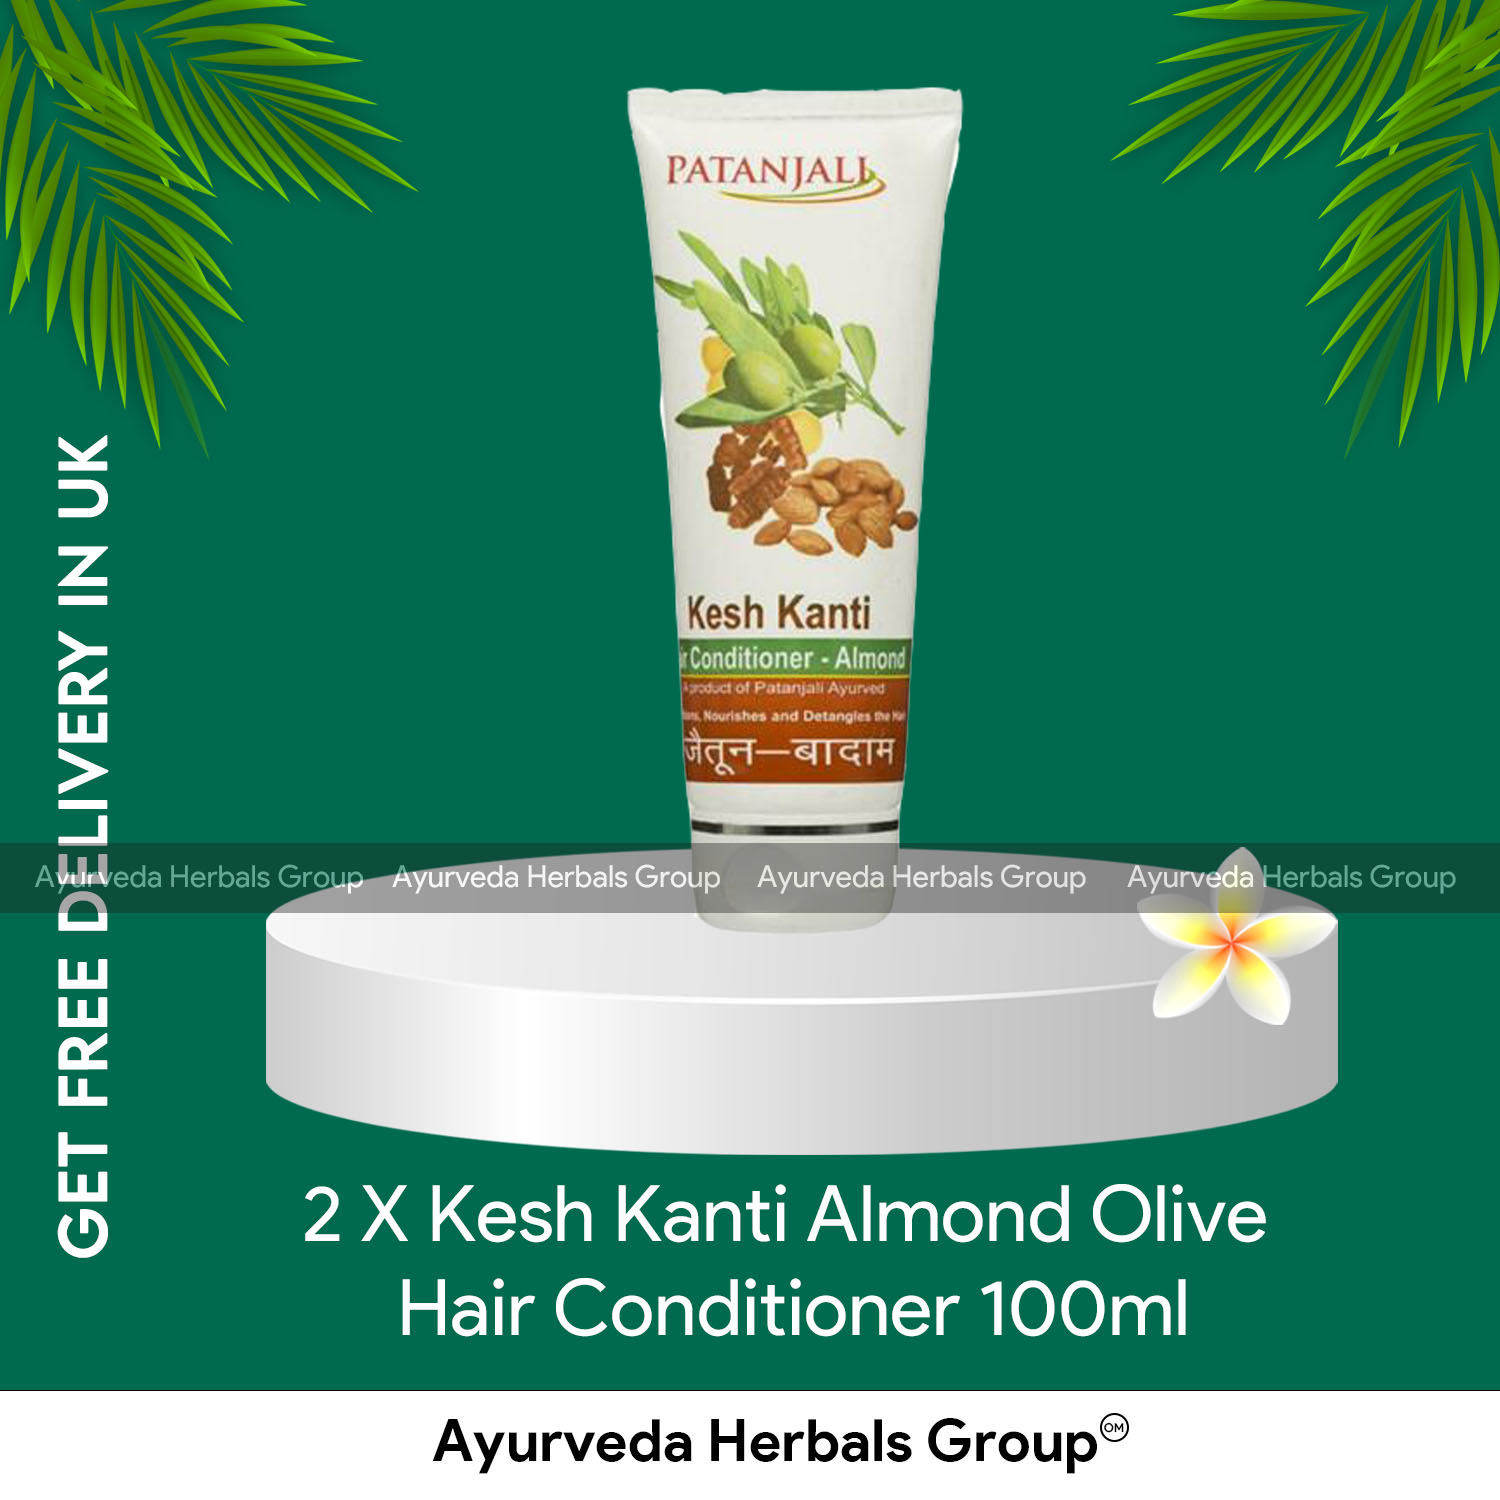 2 X Kesh Kanti Almond Olive Hair Conditioner 100ml |